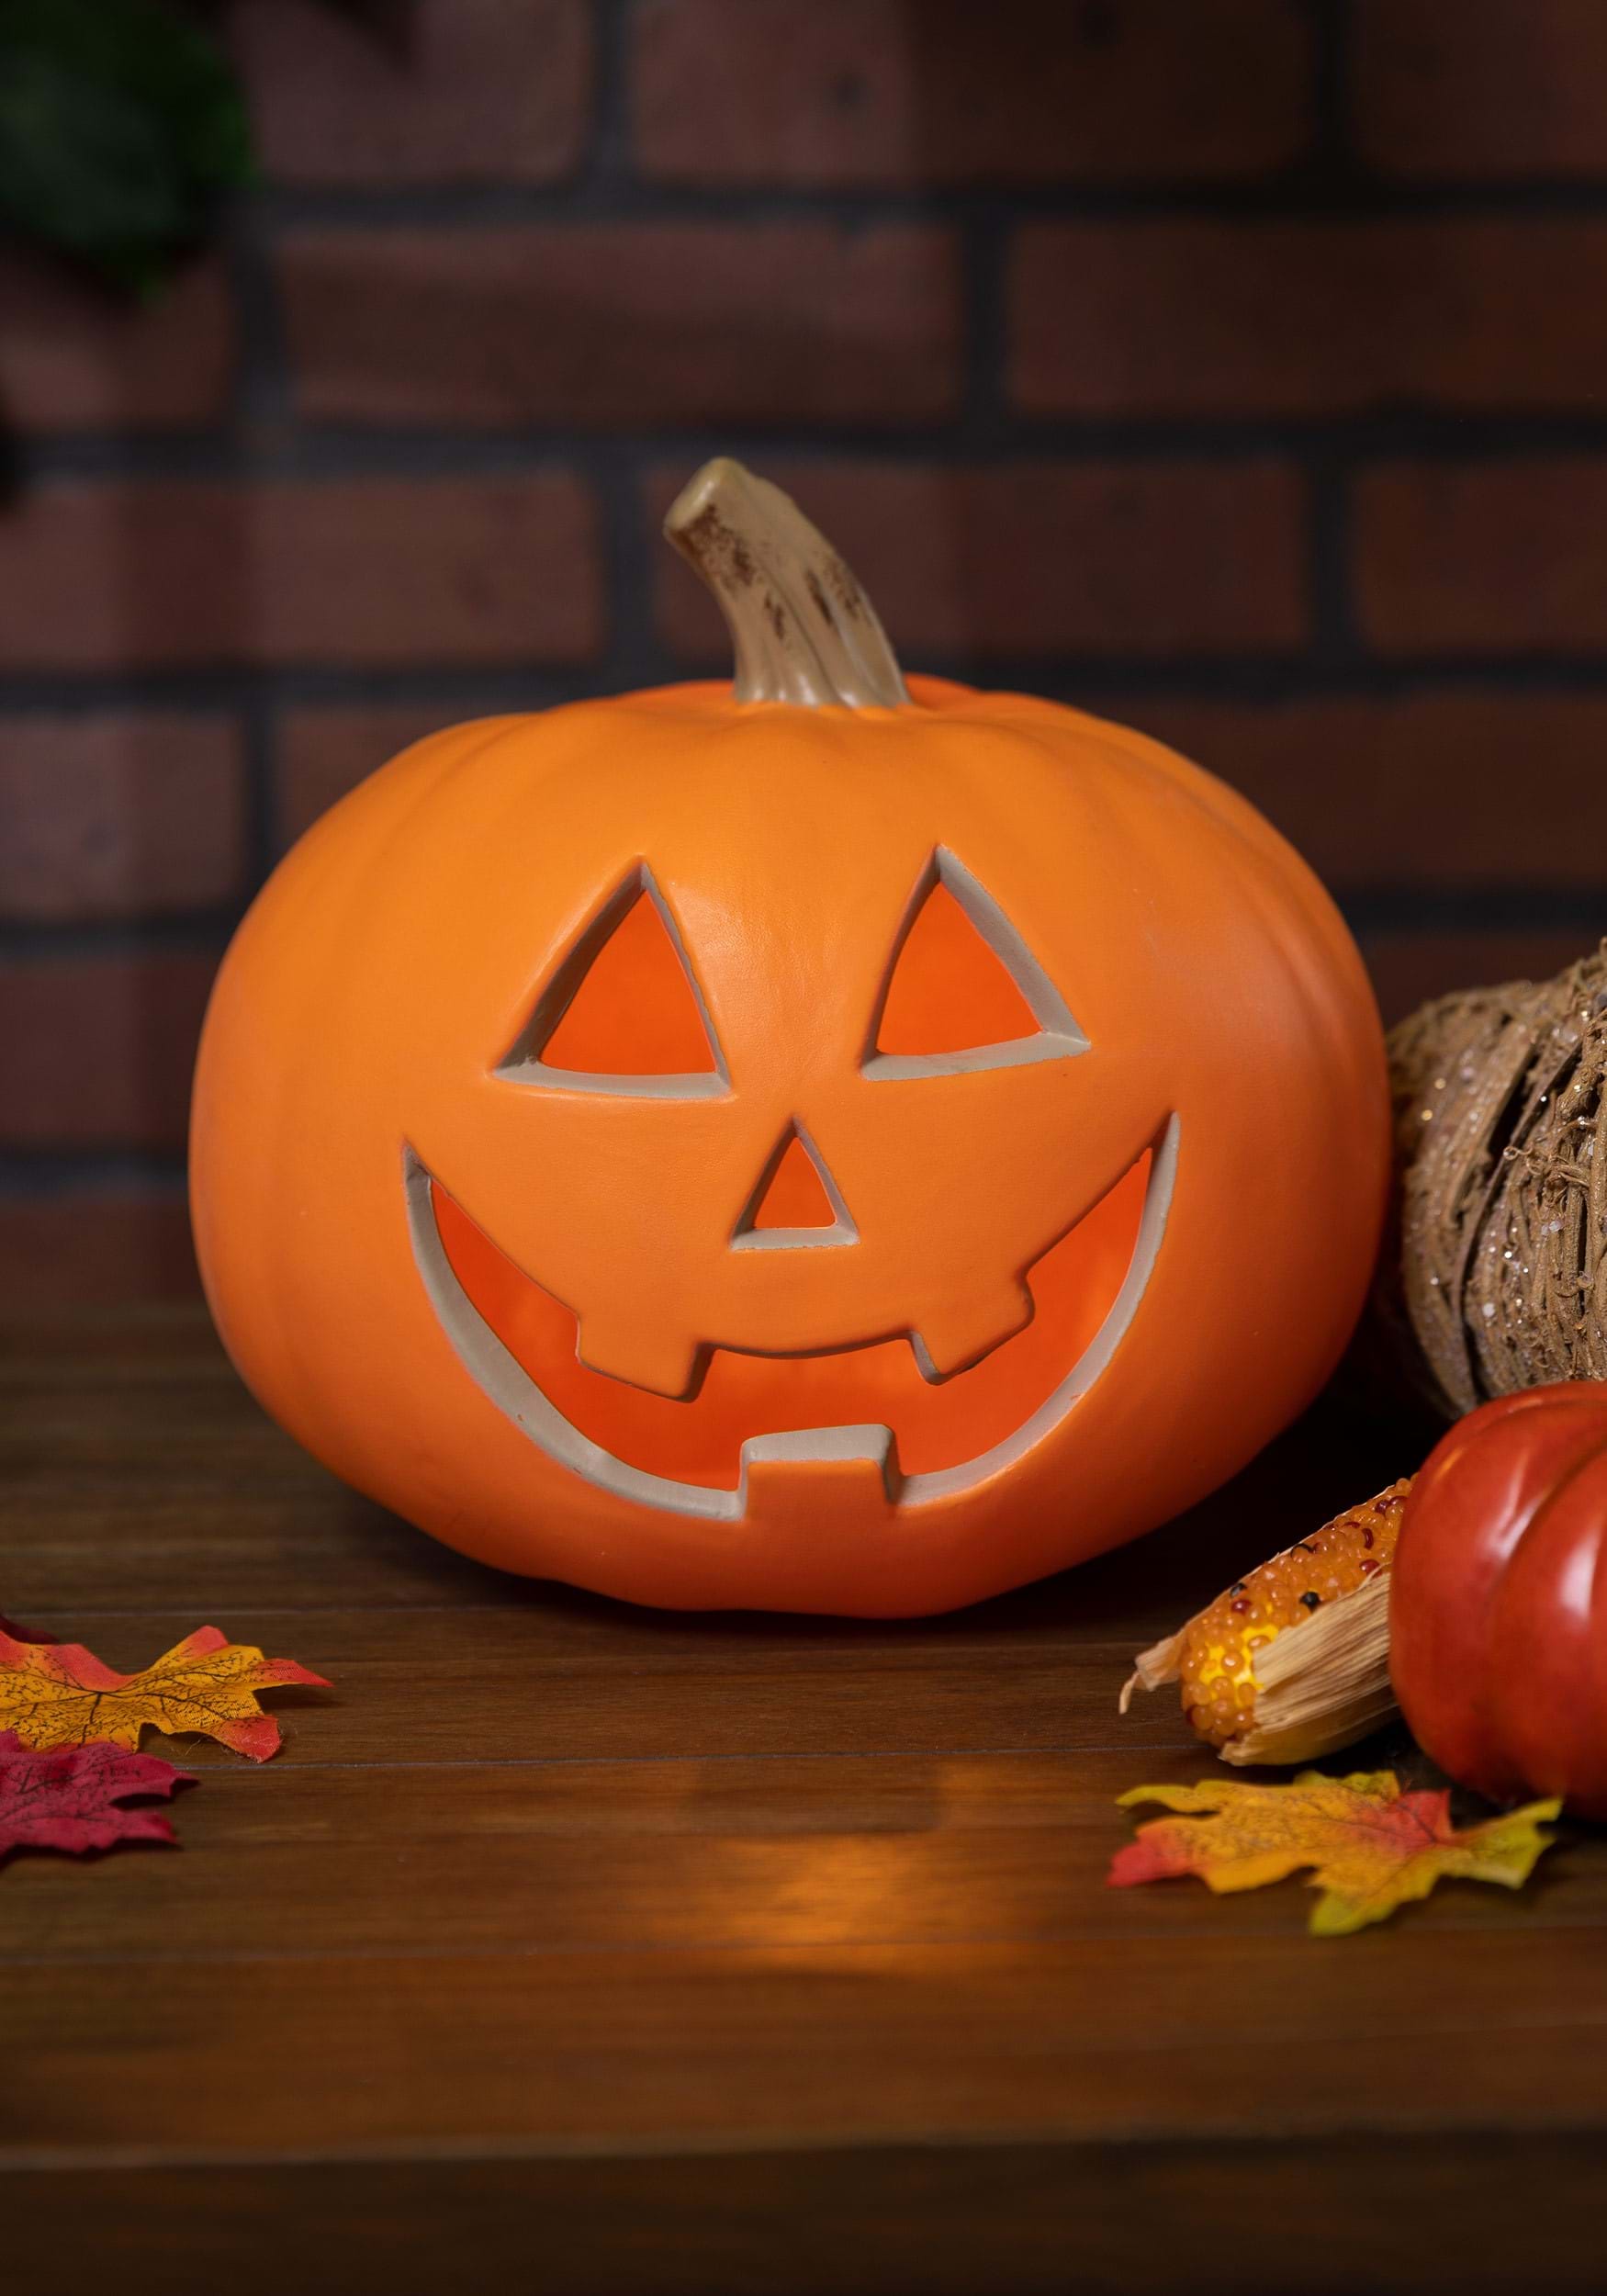 Light Up Traditional Pumpkin - Scary Jack O Lantern Decoration